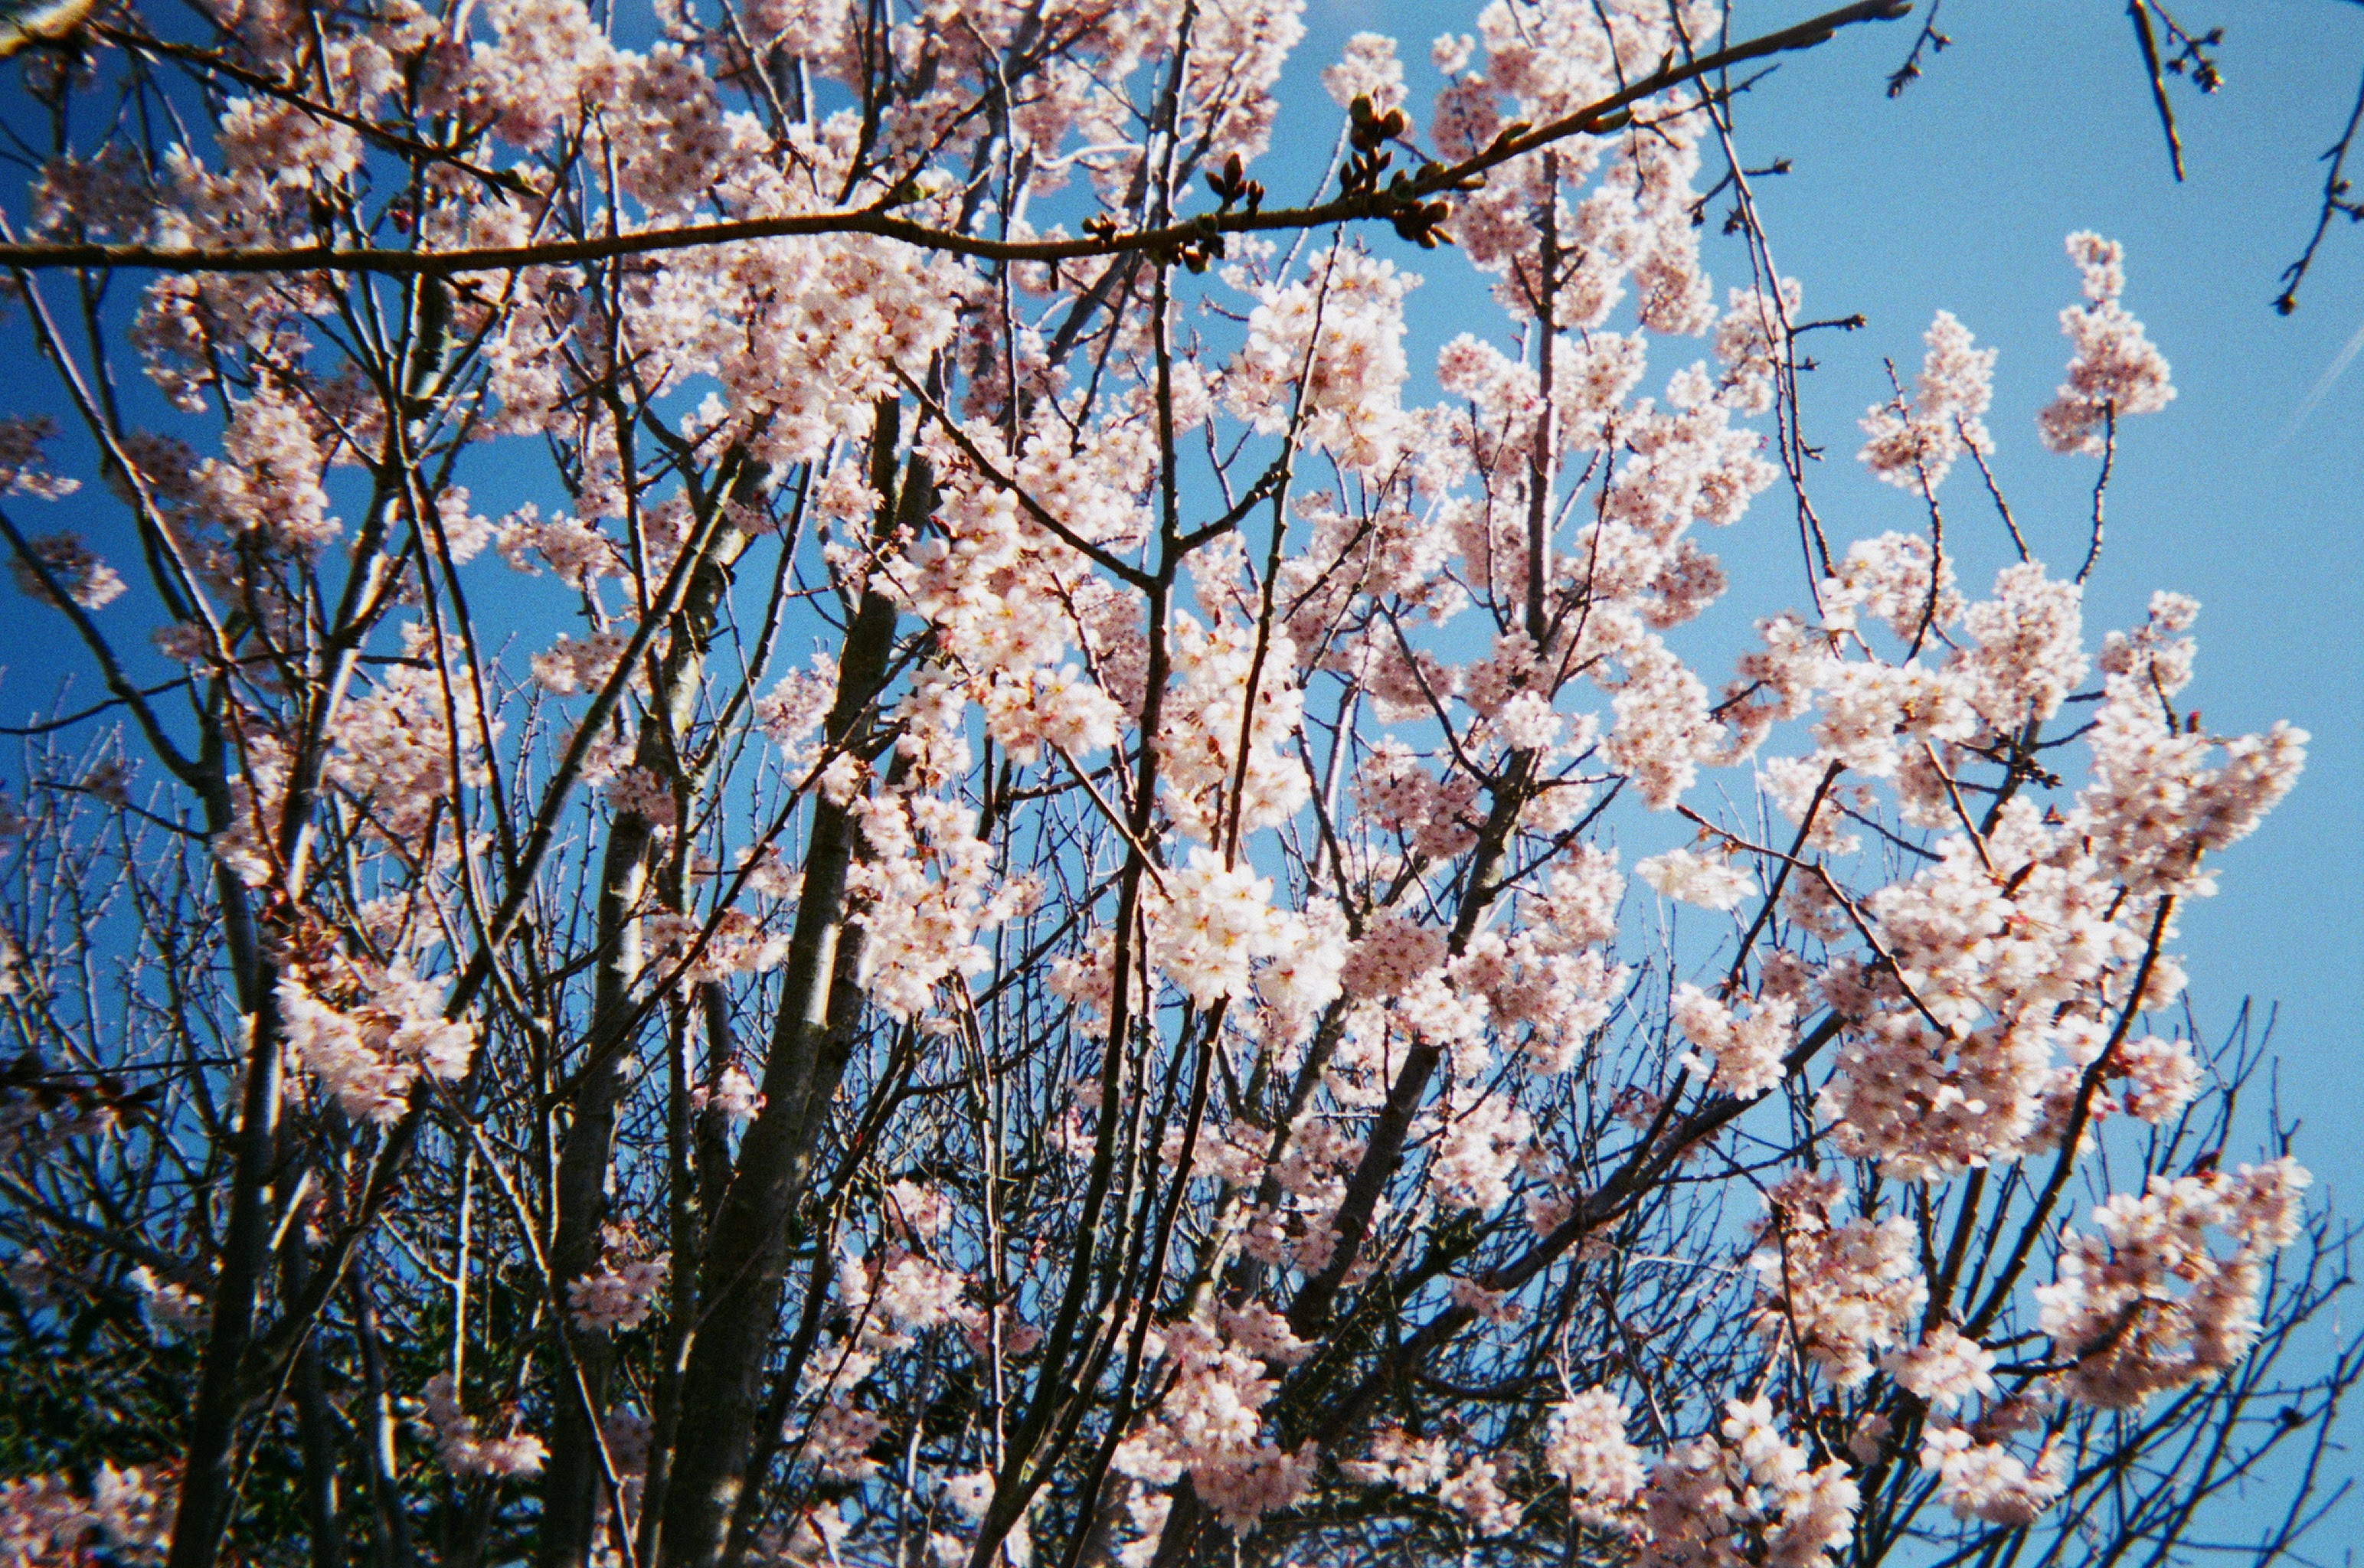 Film photo of cherry blossoms against a blue sky